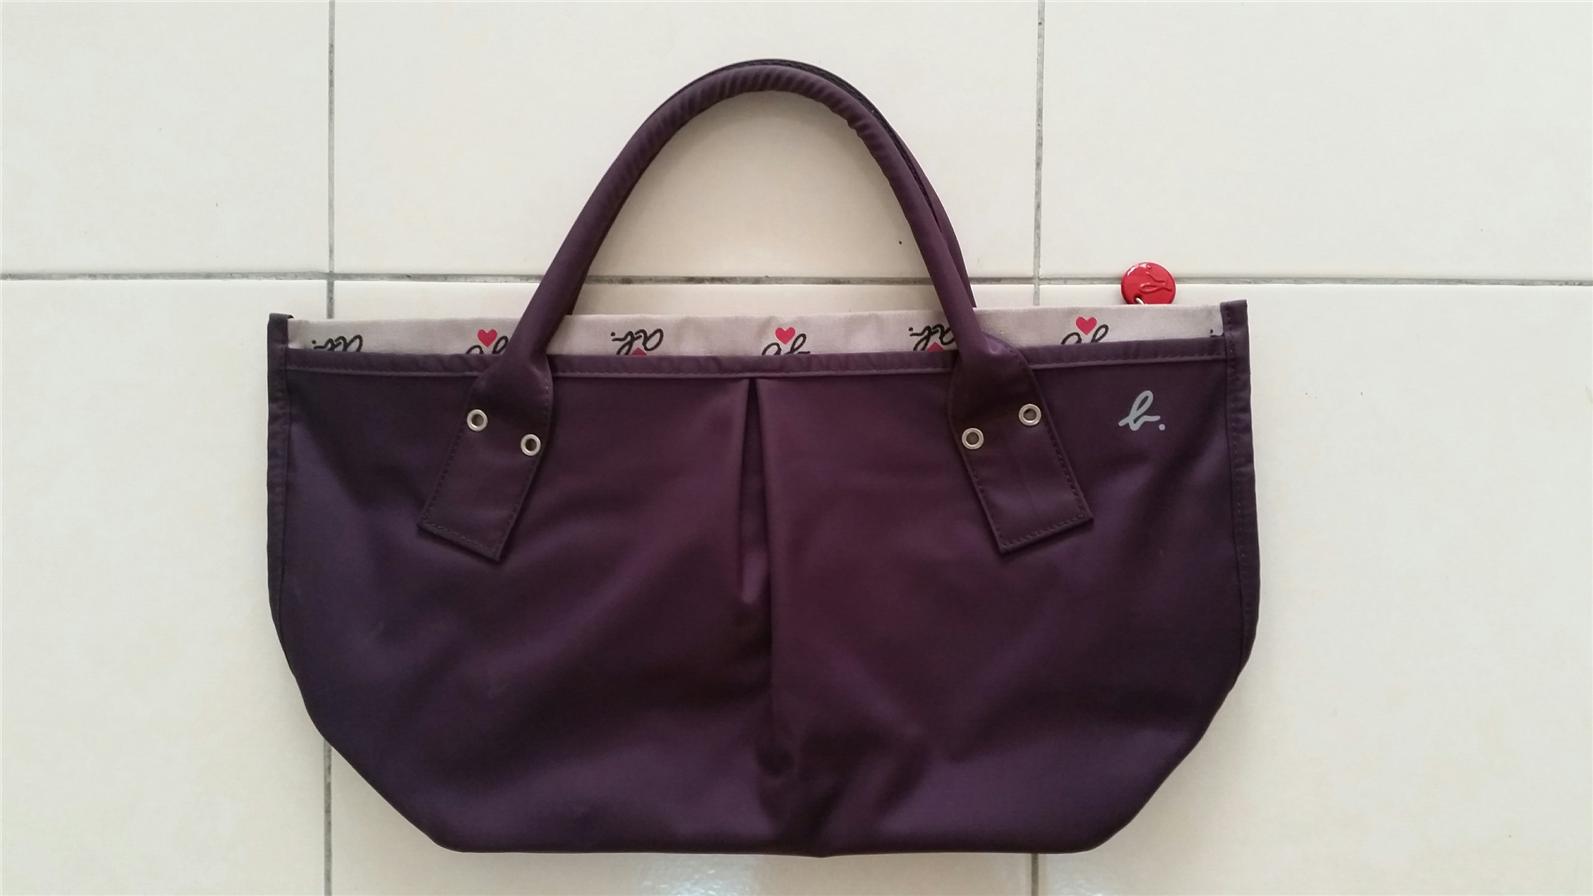 Preloved Handbag Malaysia Instagram | SEMA Data Co-op